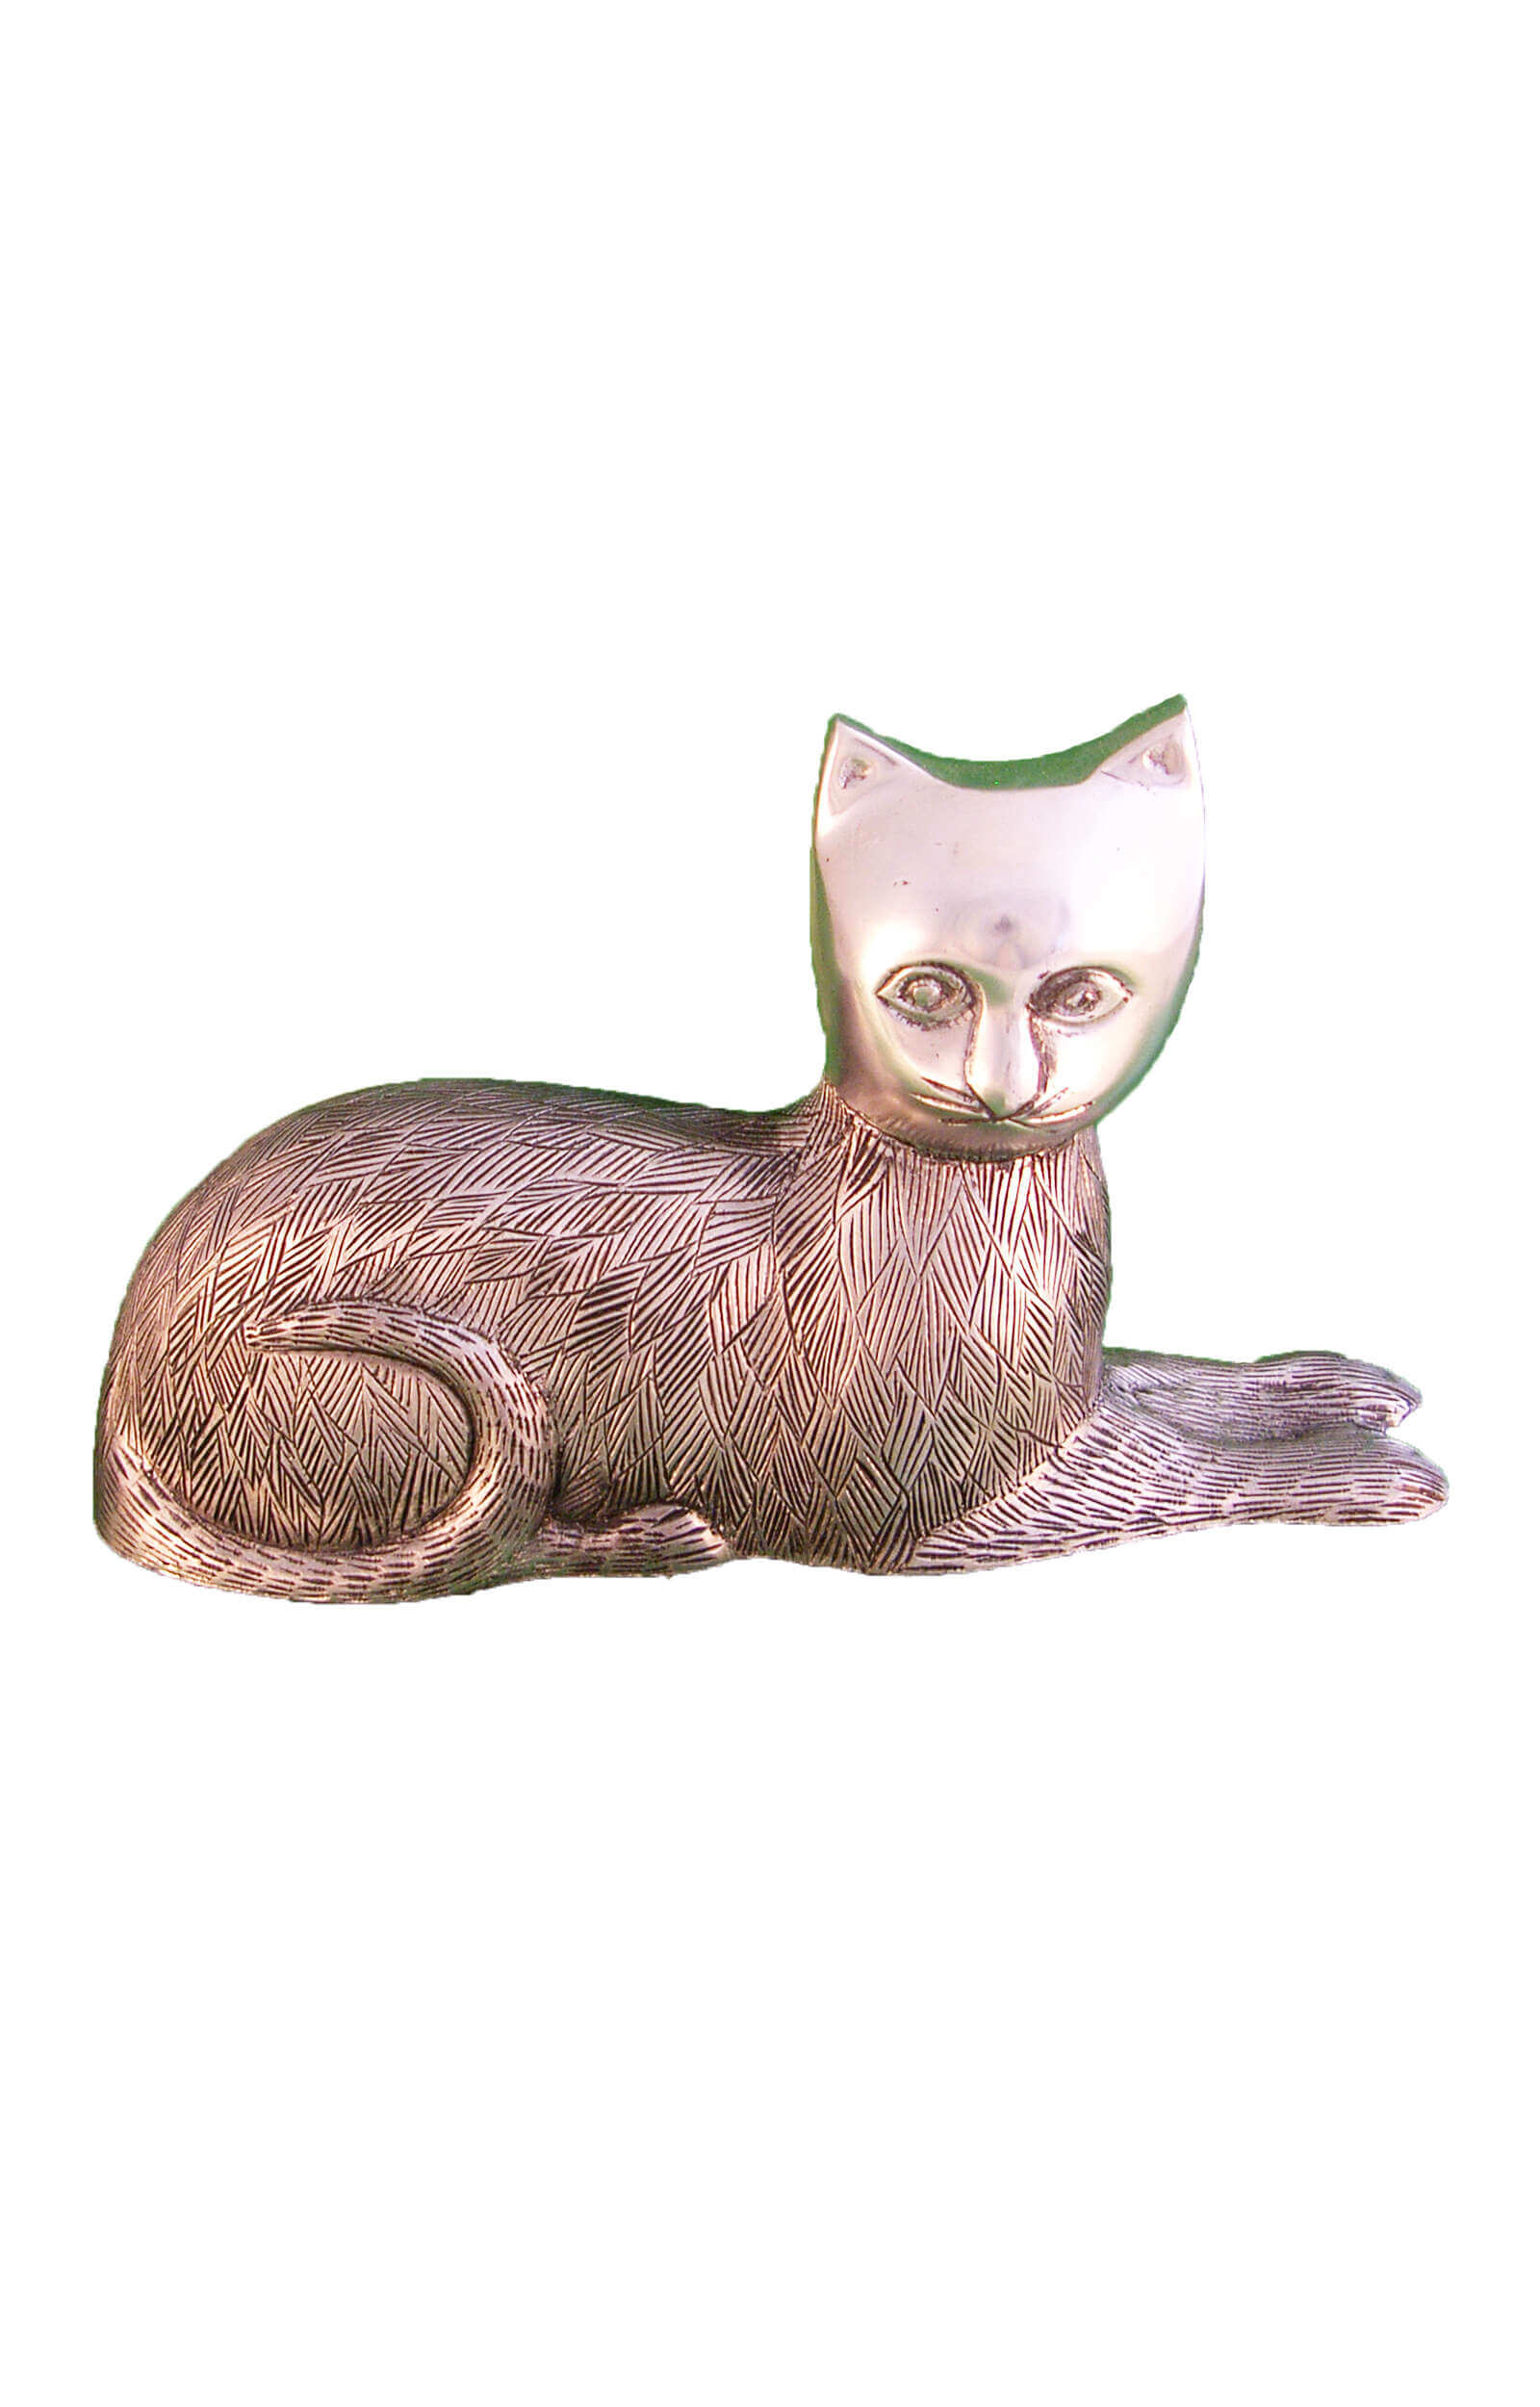 en TIB1202 silver sitting cat urn for ashes